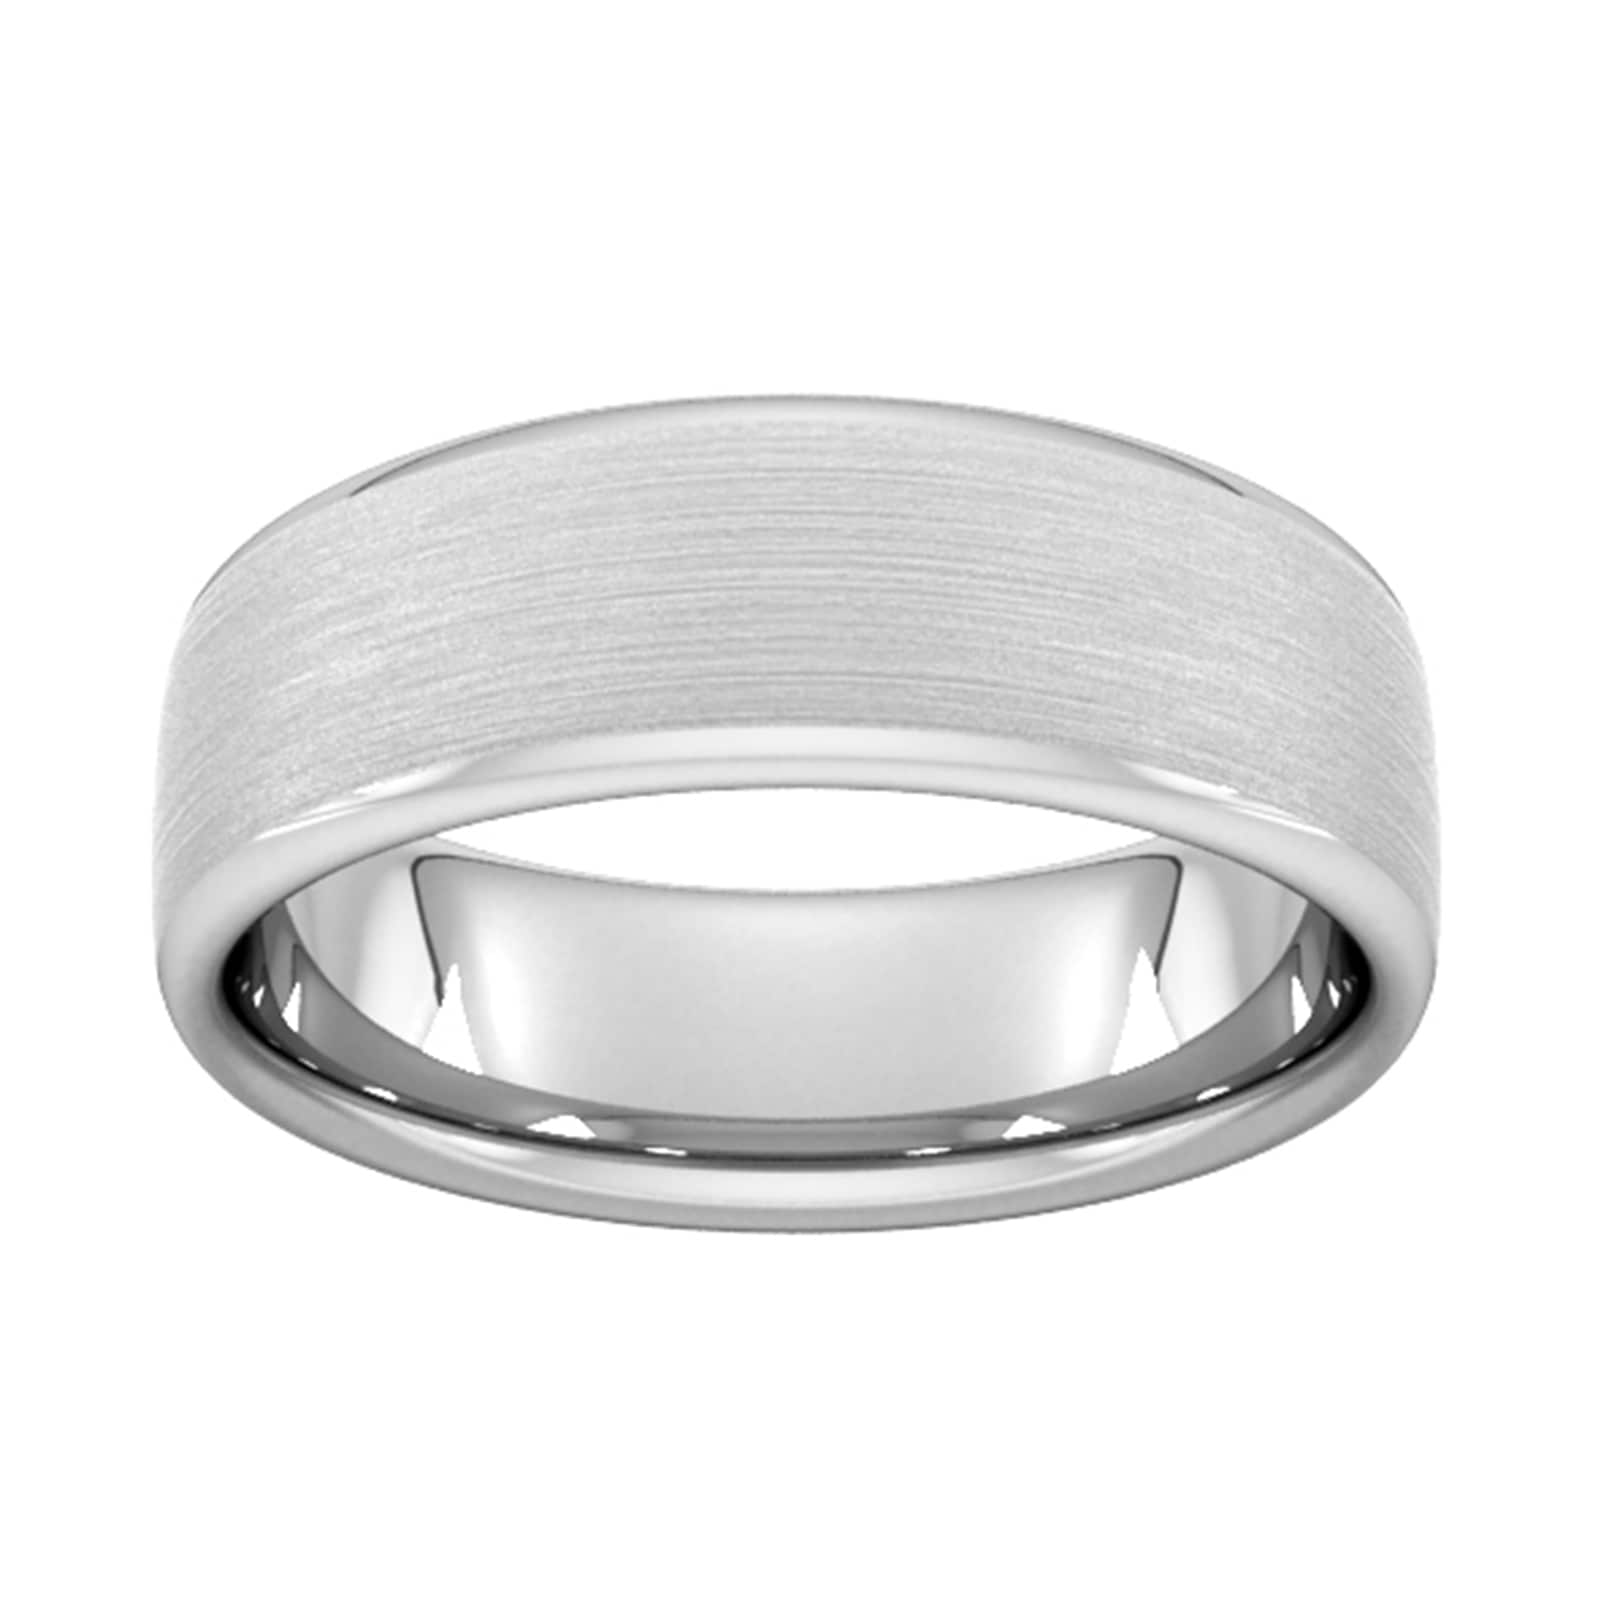 7mm Slight Court Standard Matt Finished Wedding Ring In 950 Palladium - Ring Size H